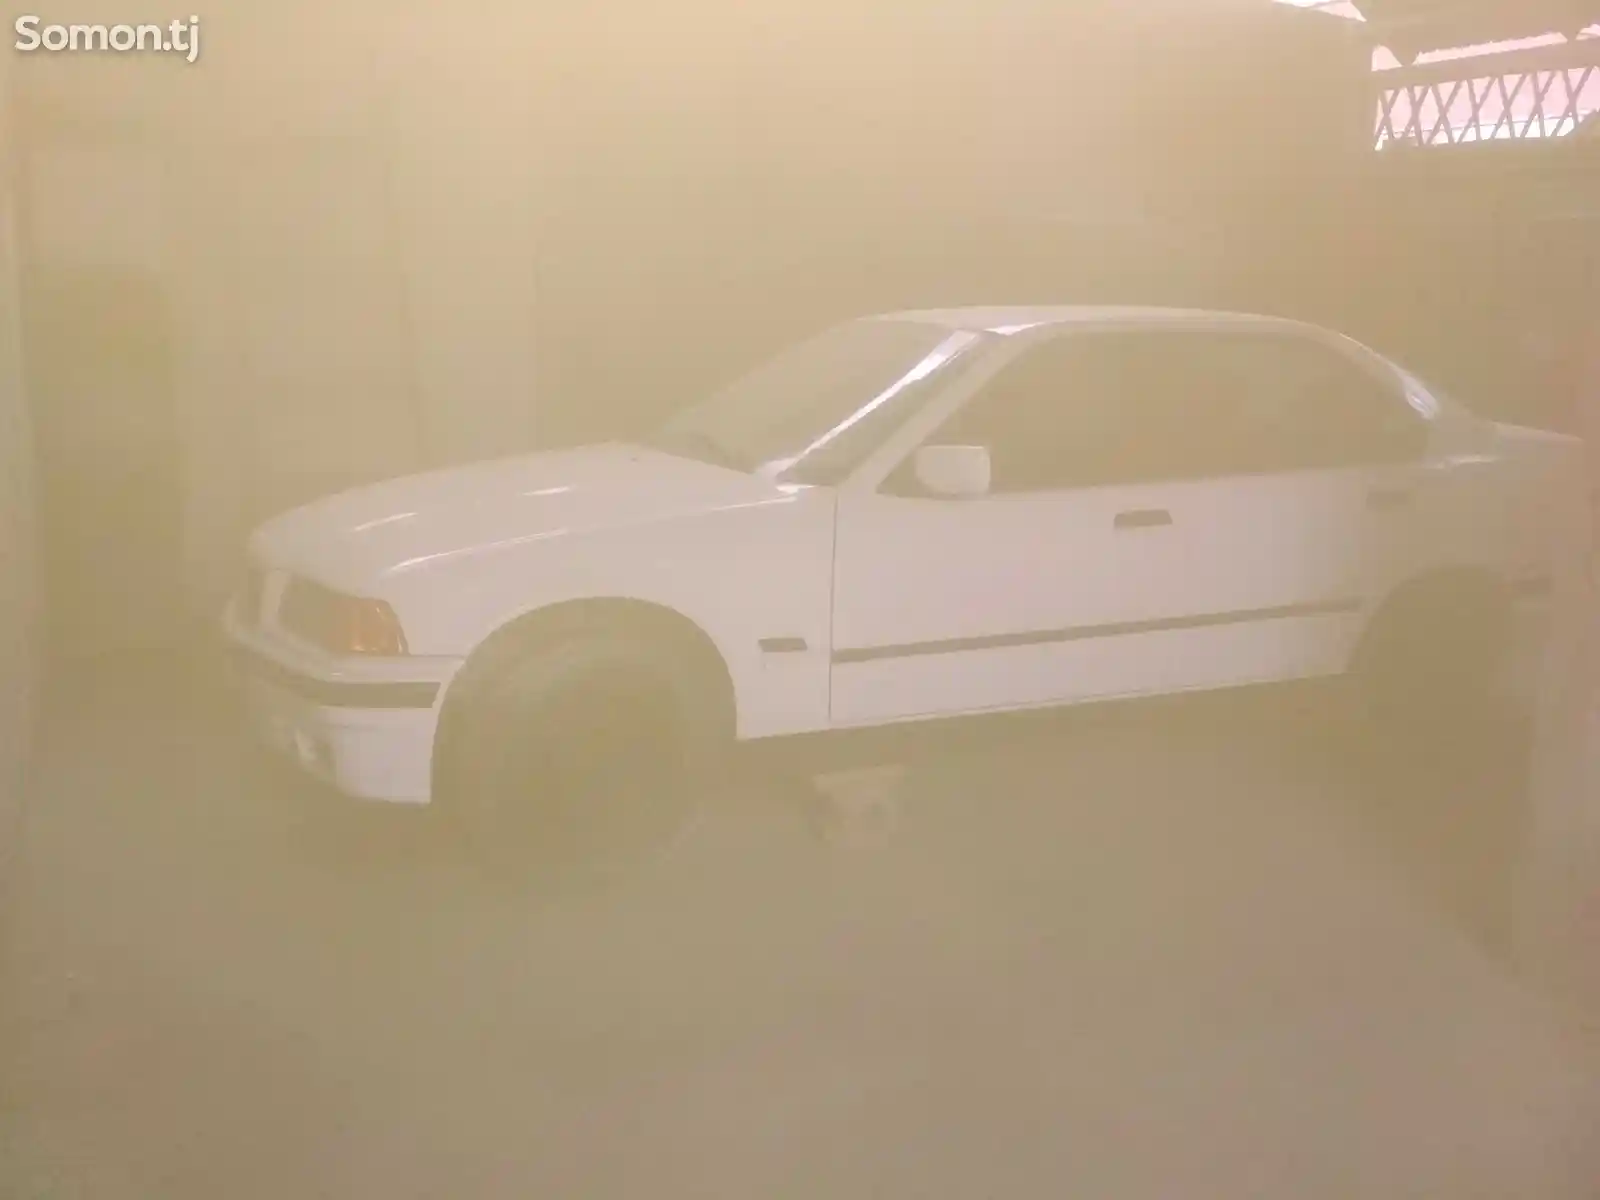 BMW 3 series, 1993-3